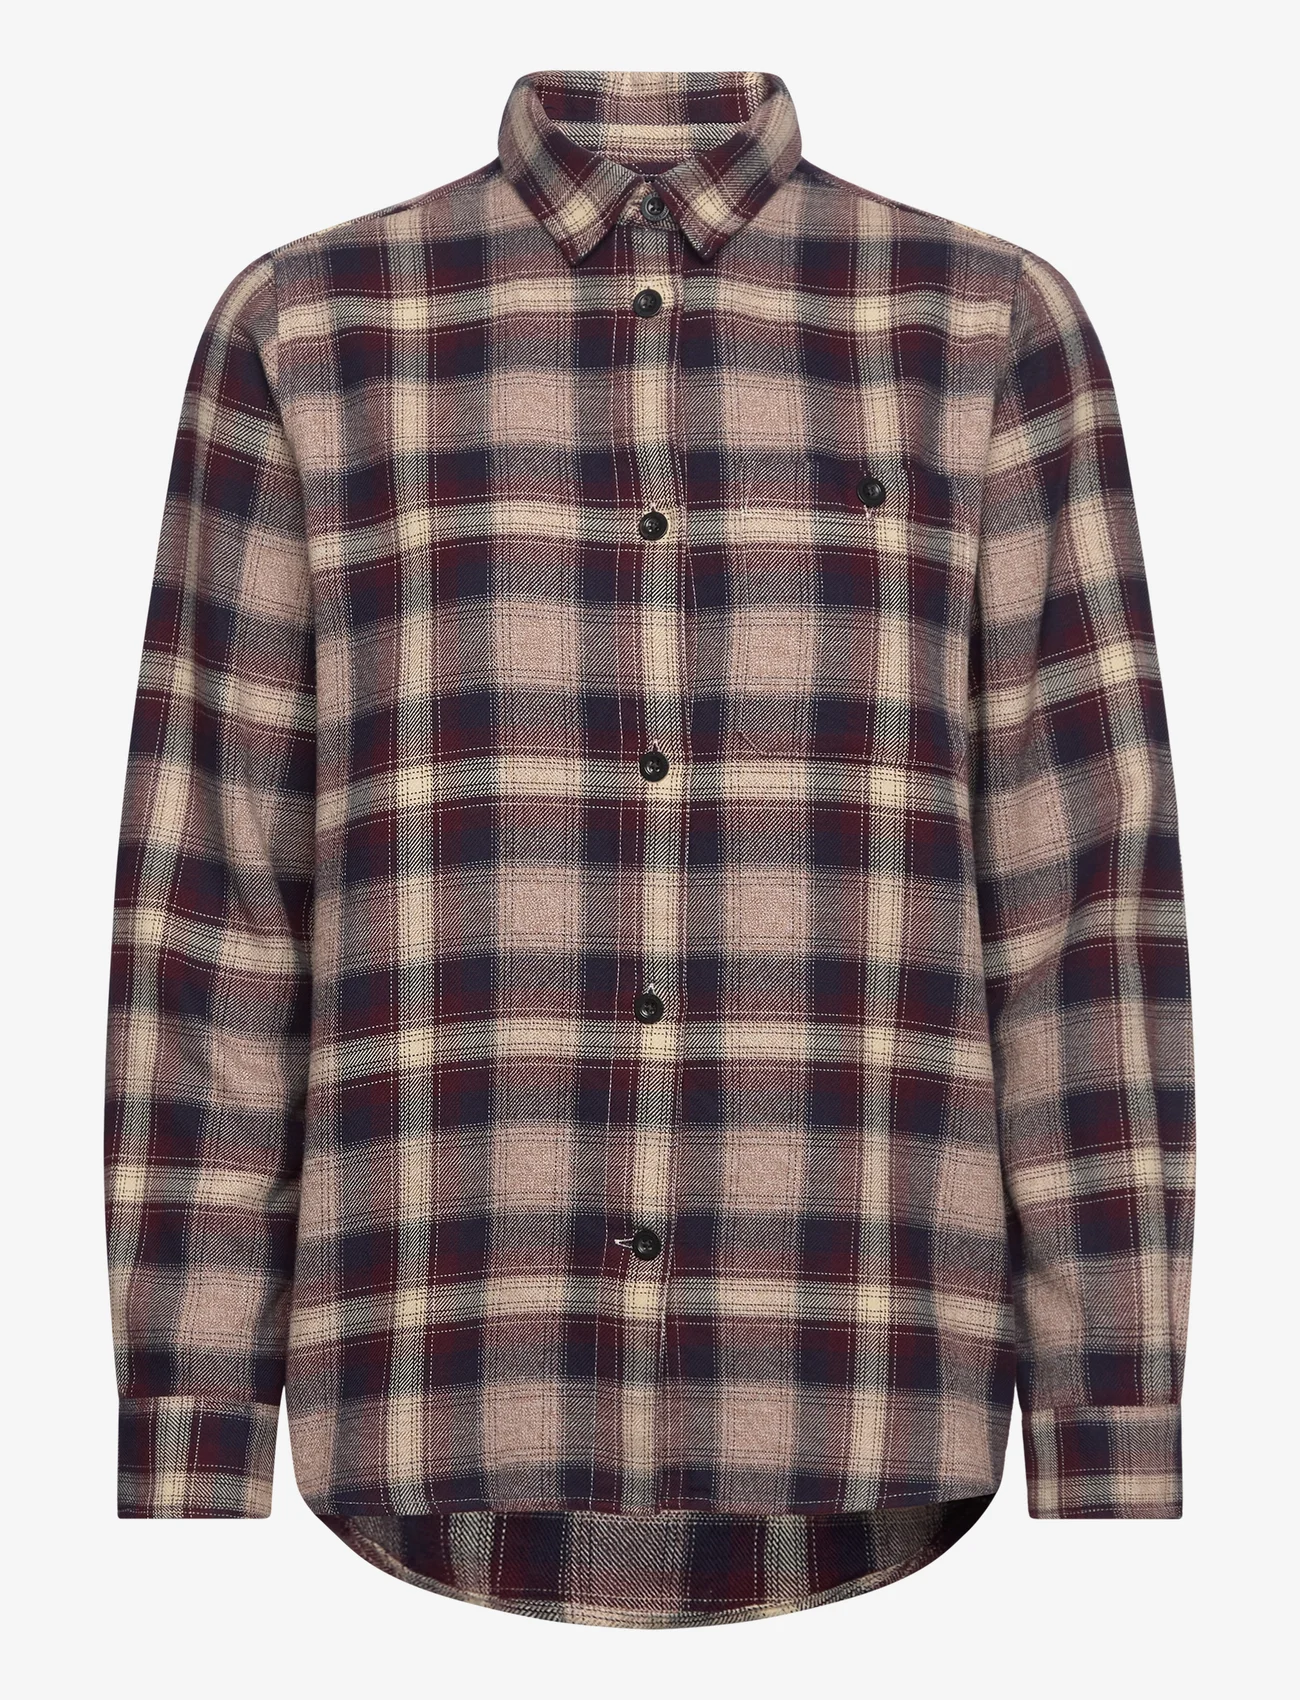 Peak Performance - W Cotton Flannel Shirt-141 CHECK - long-sleeved shirts - 141 check - 0